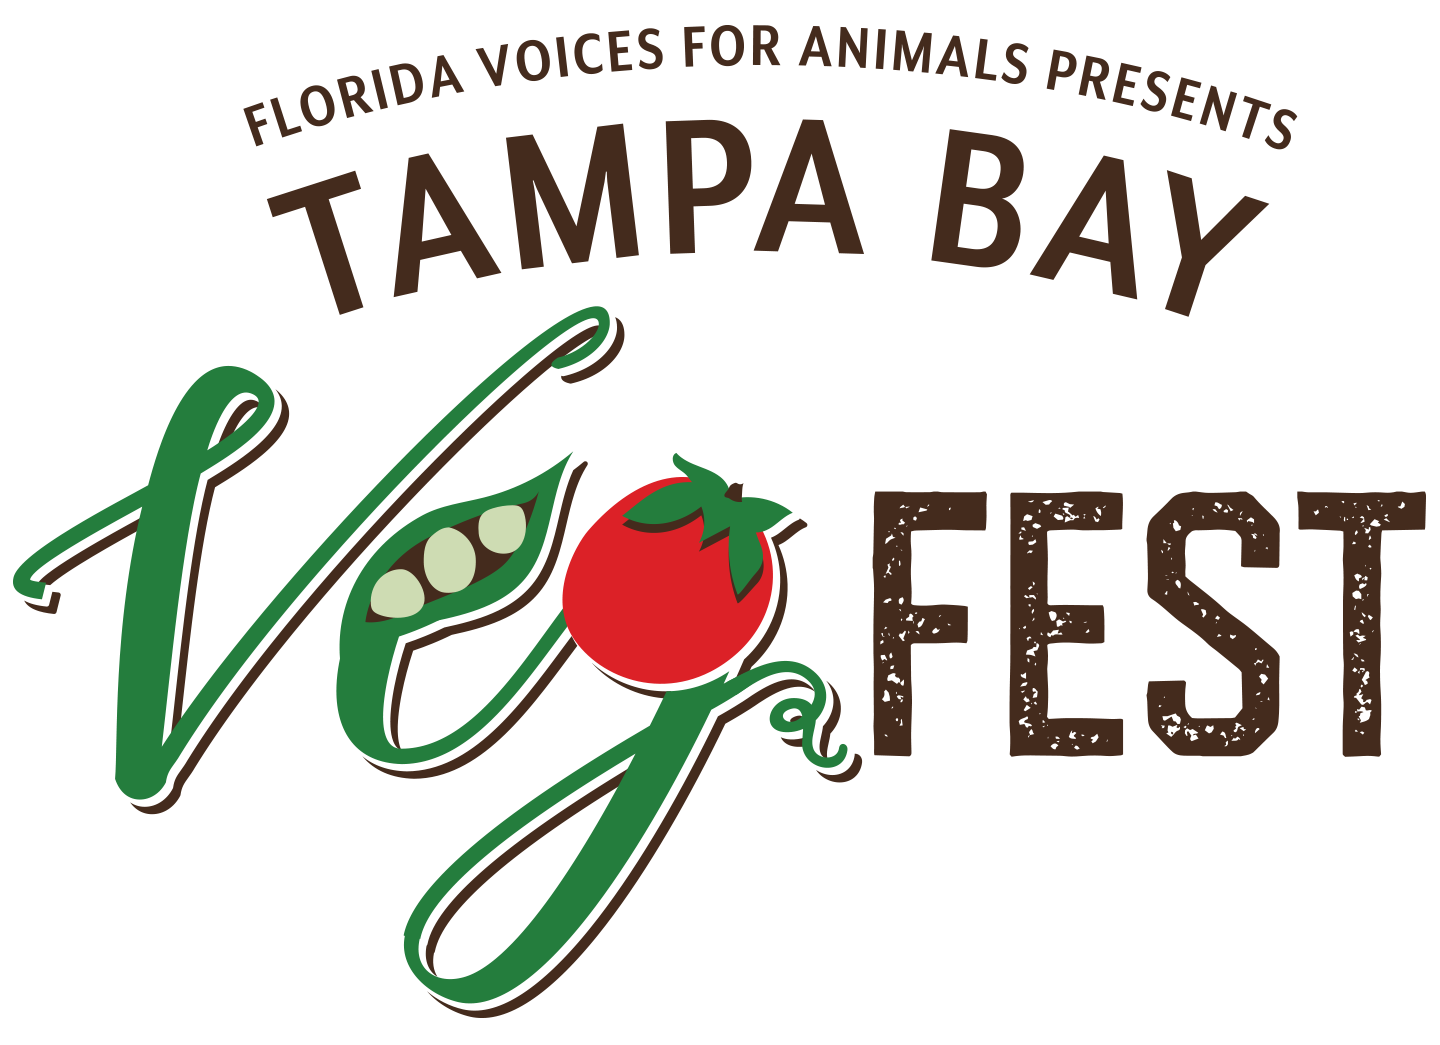 Tampa Bay Veg Fest